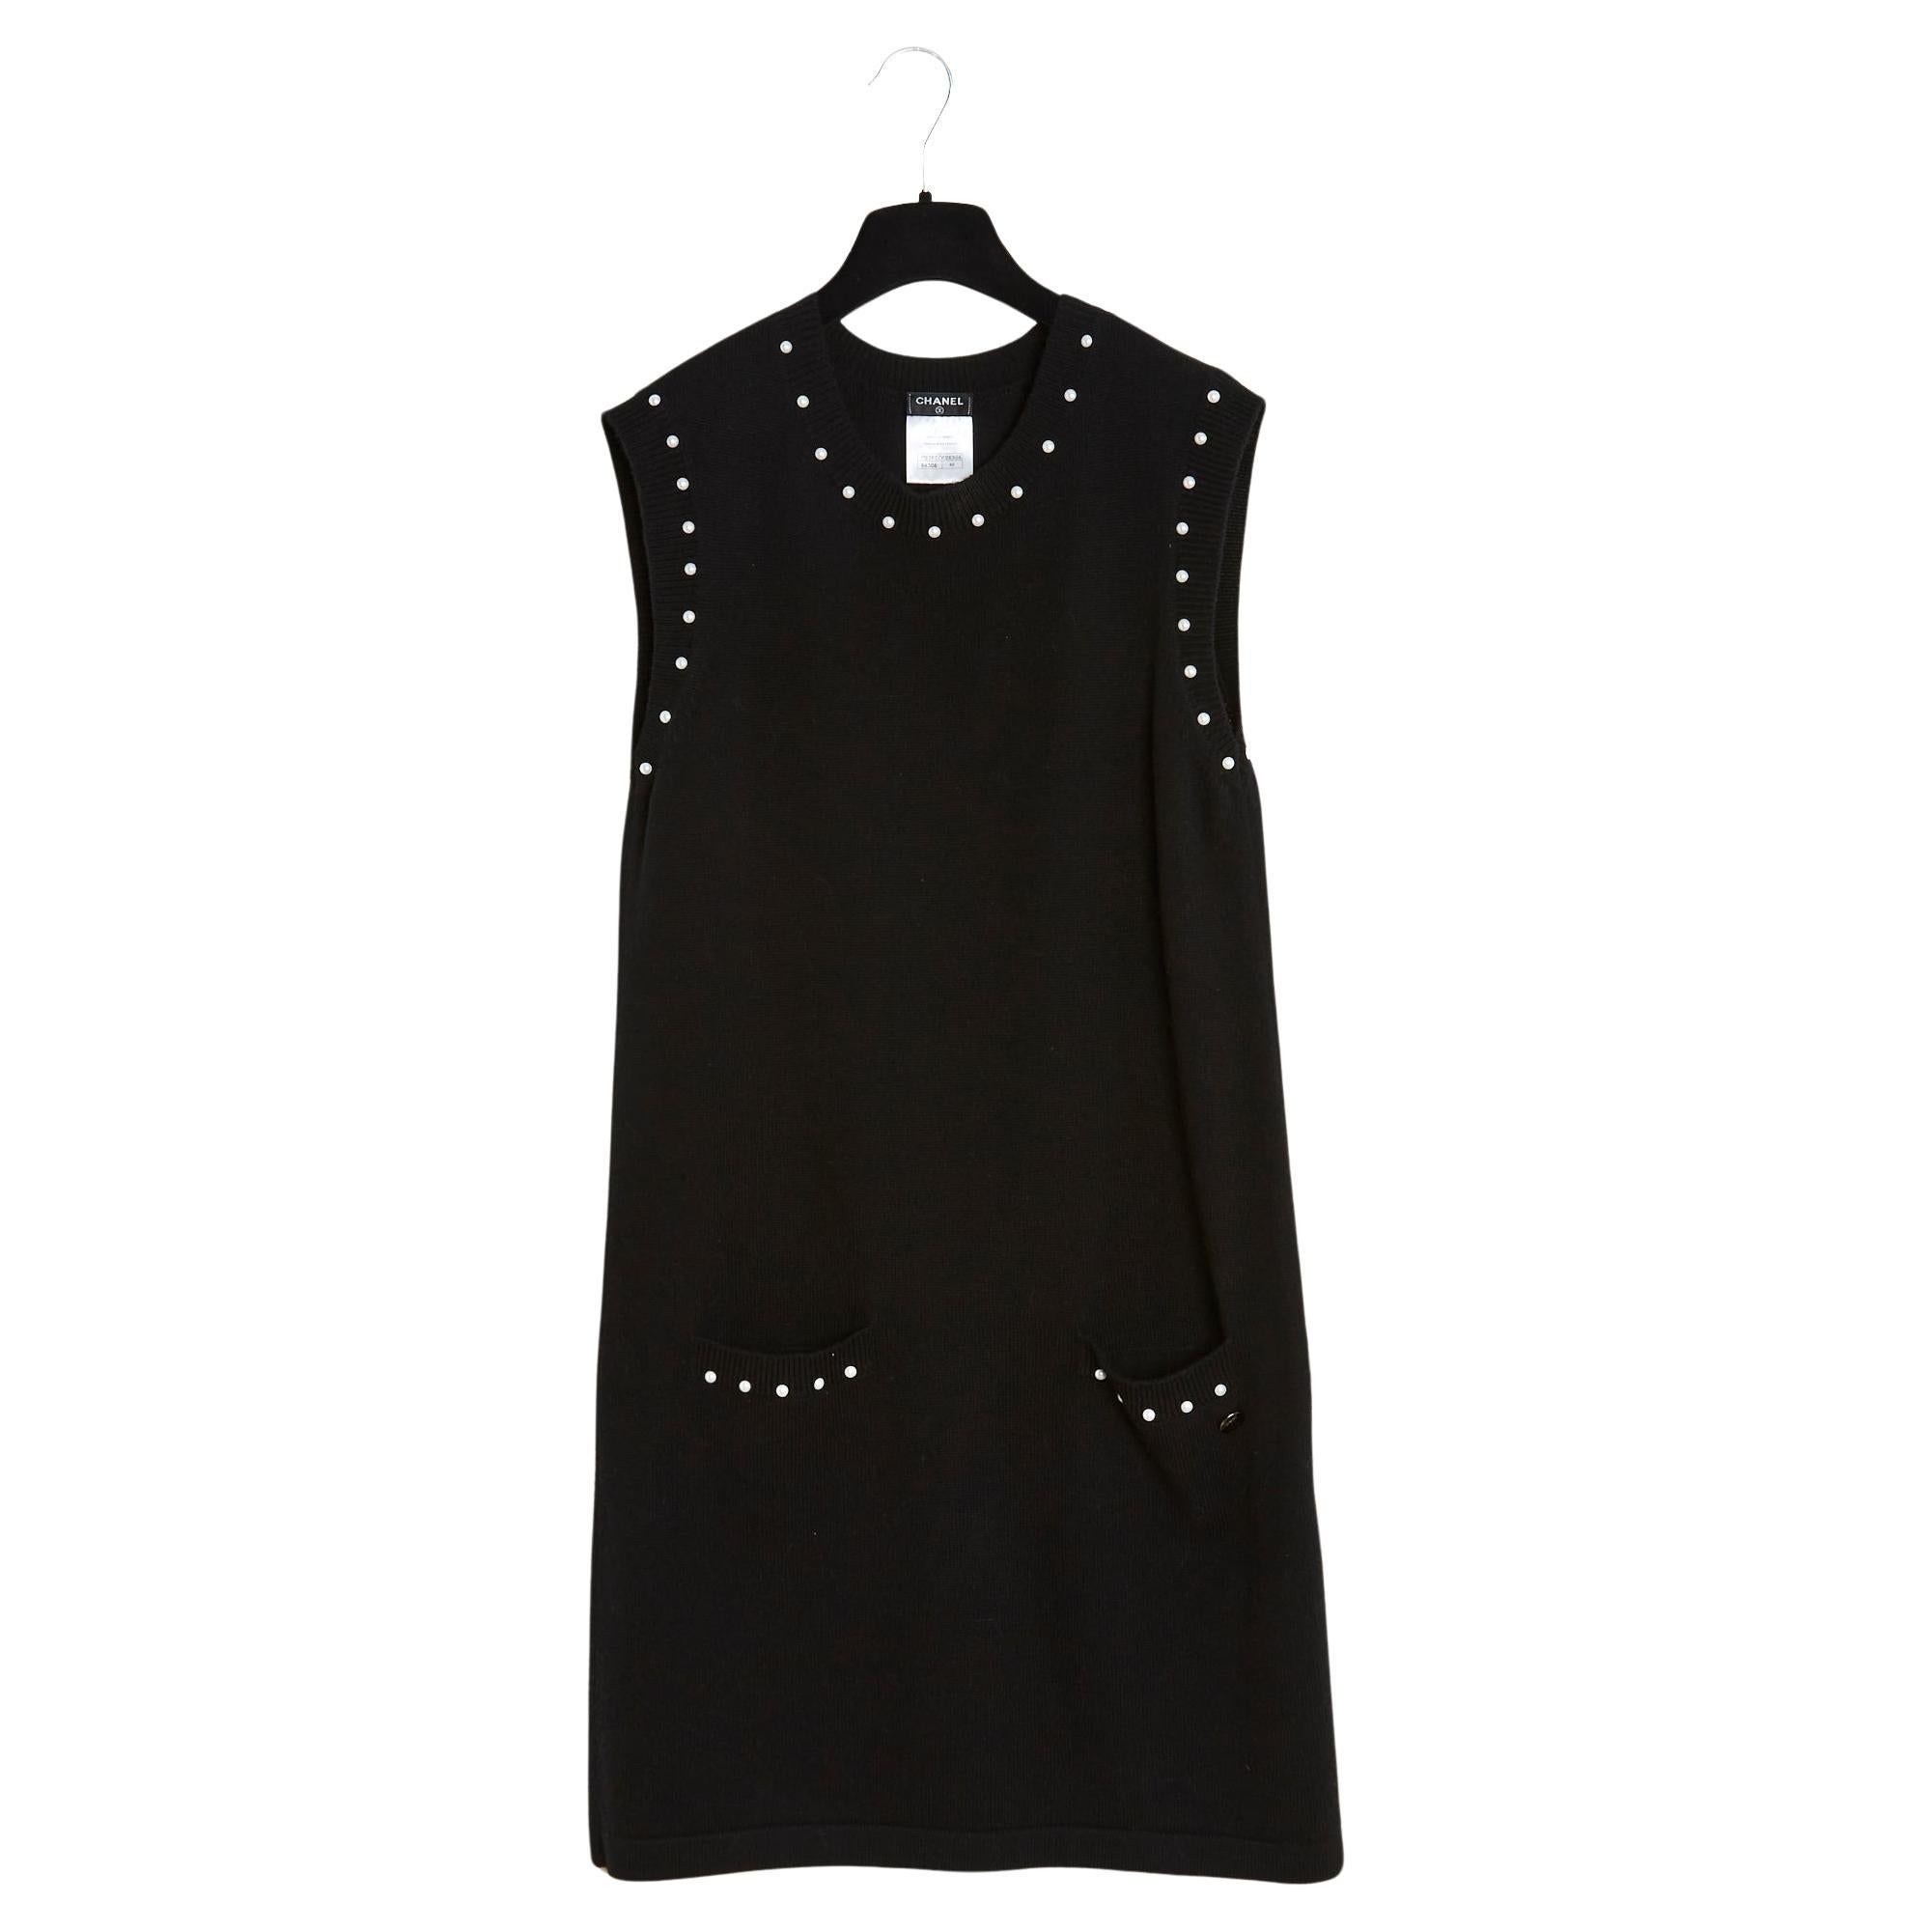 FW 2015 Chanel Black Knit and Fancy Pearls dress FR40